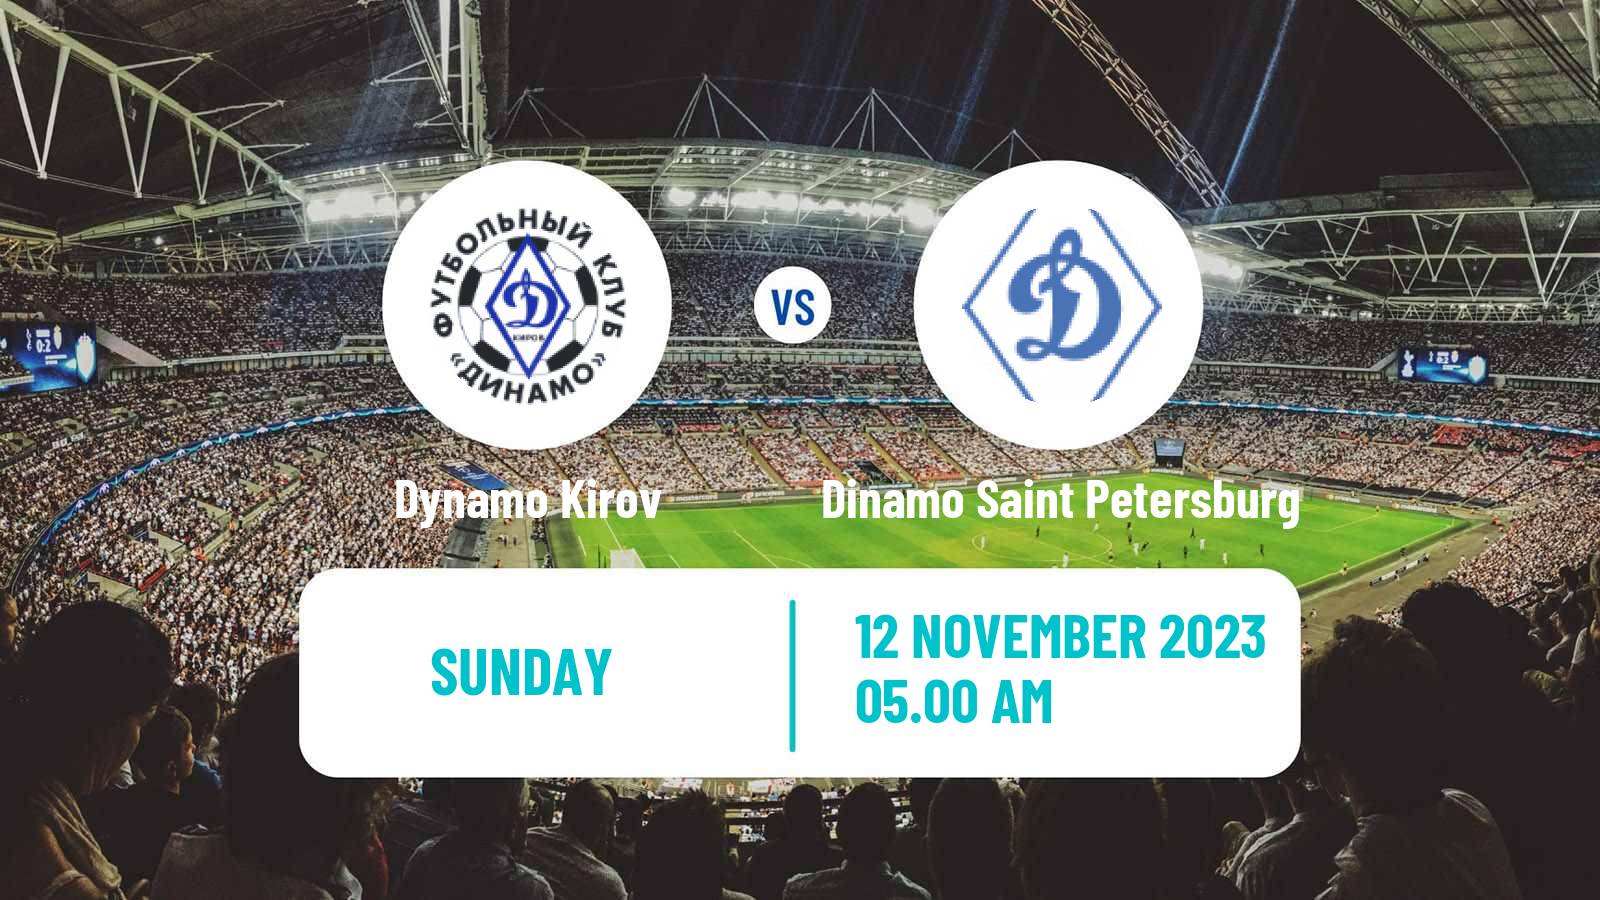 Soccer FNL 2 Division B Group 2 Dynamo Kirov - Dinamo Saint Petersburg